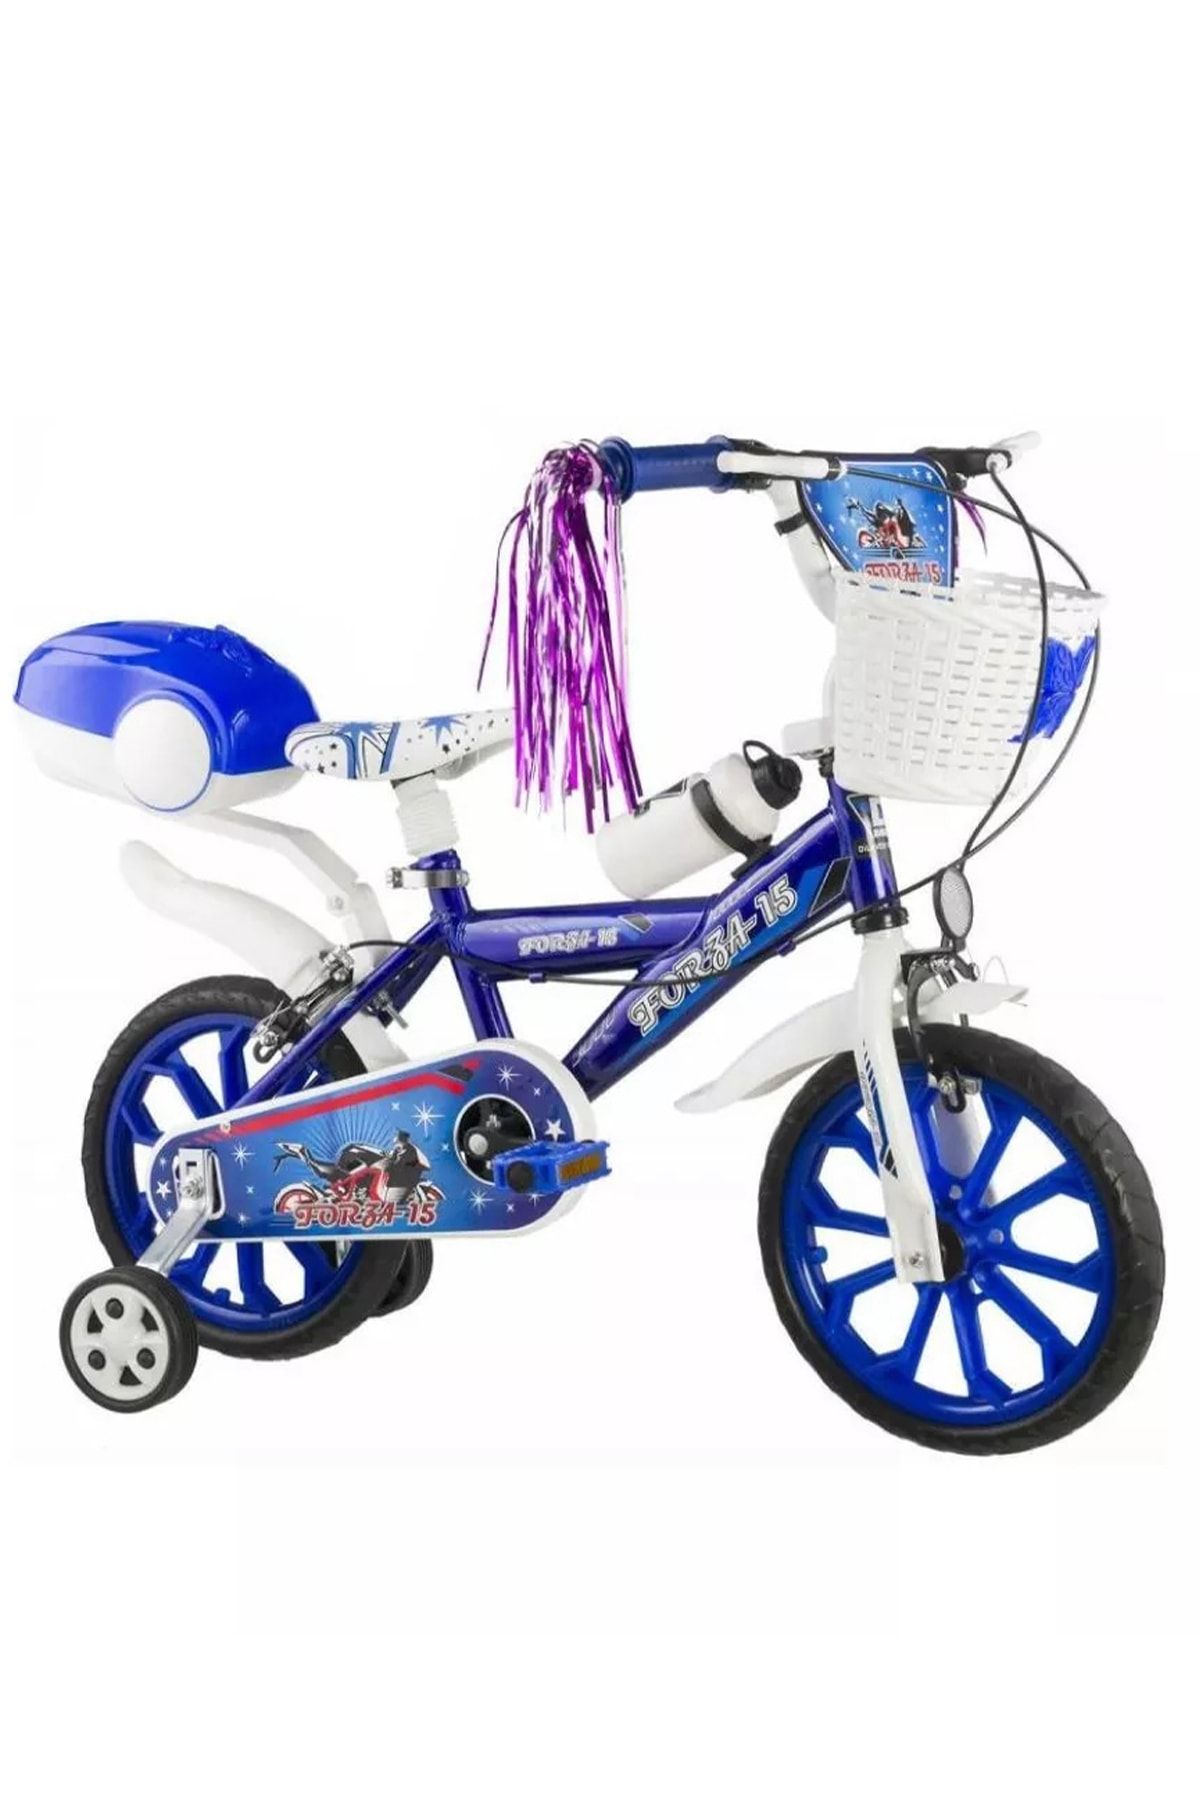 Holly 15 Jant Forza Çocuk Bisikleti 4-5-6-7 Yaş Mavi Bisiklet Dolgu Teker